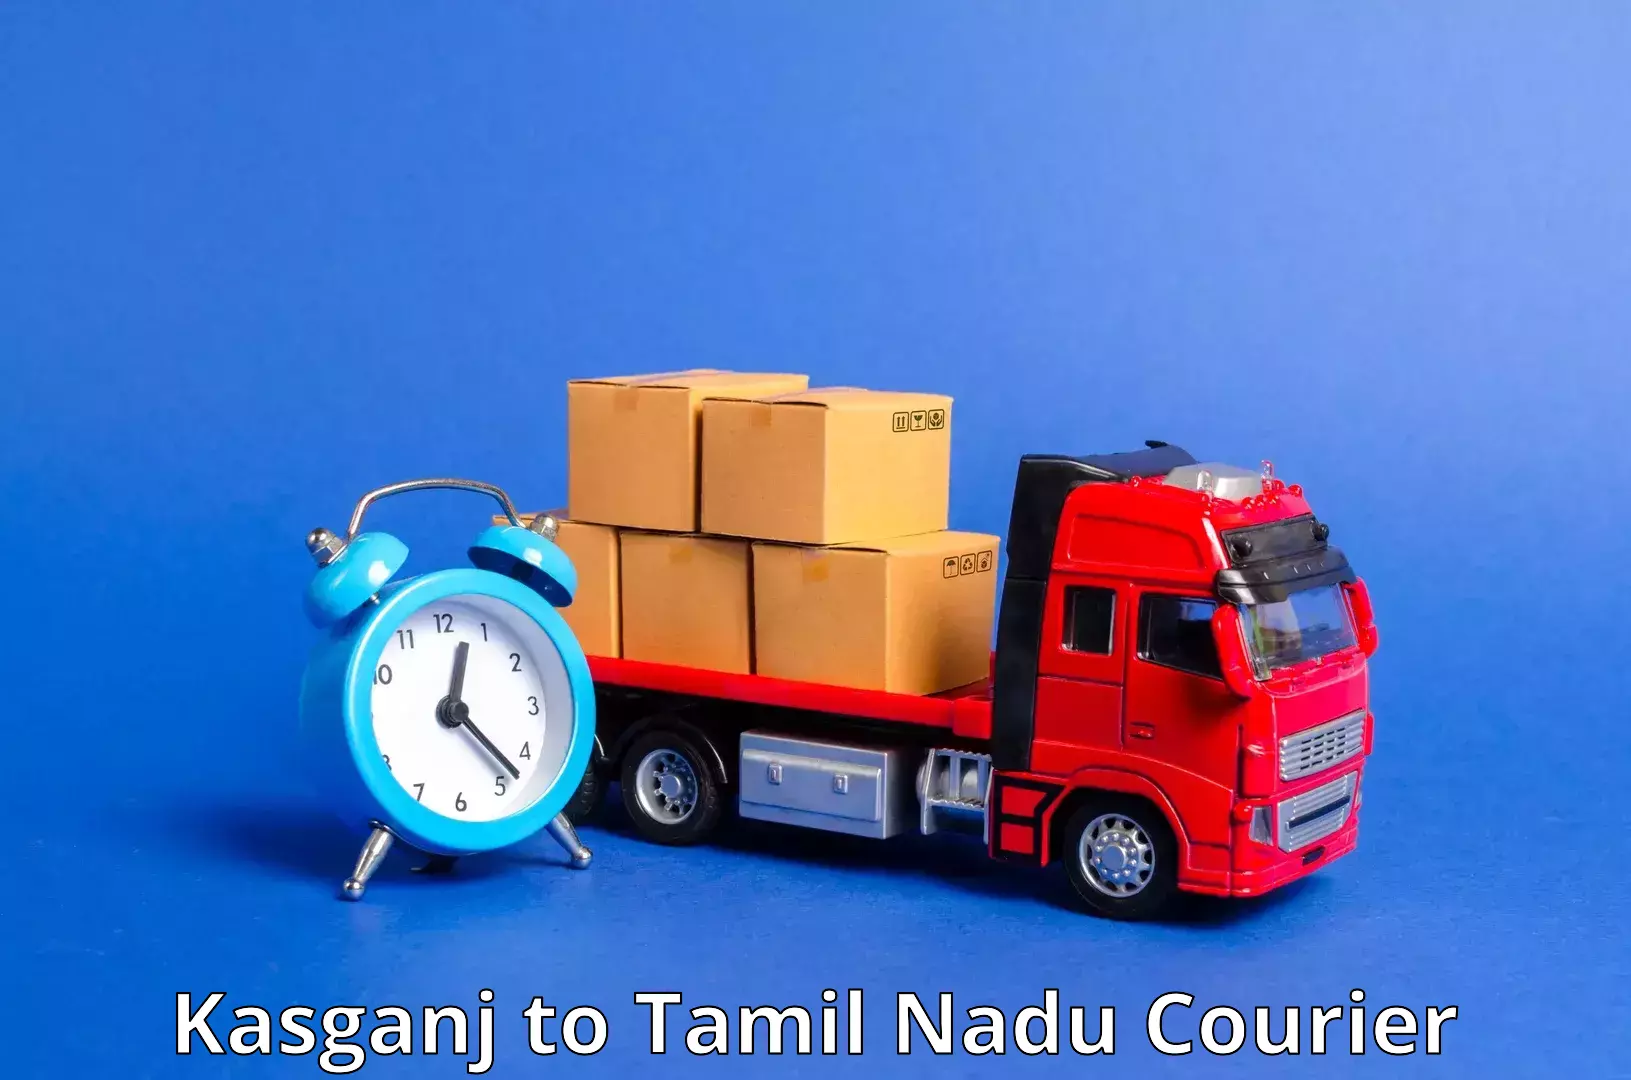 Delivery service partnership Kasganj to Tamil Nadu